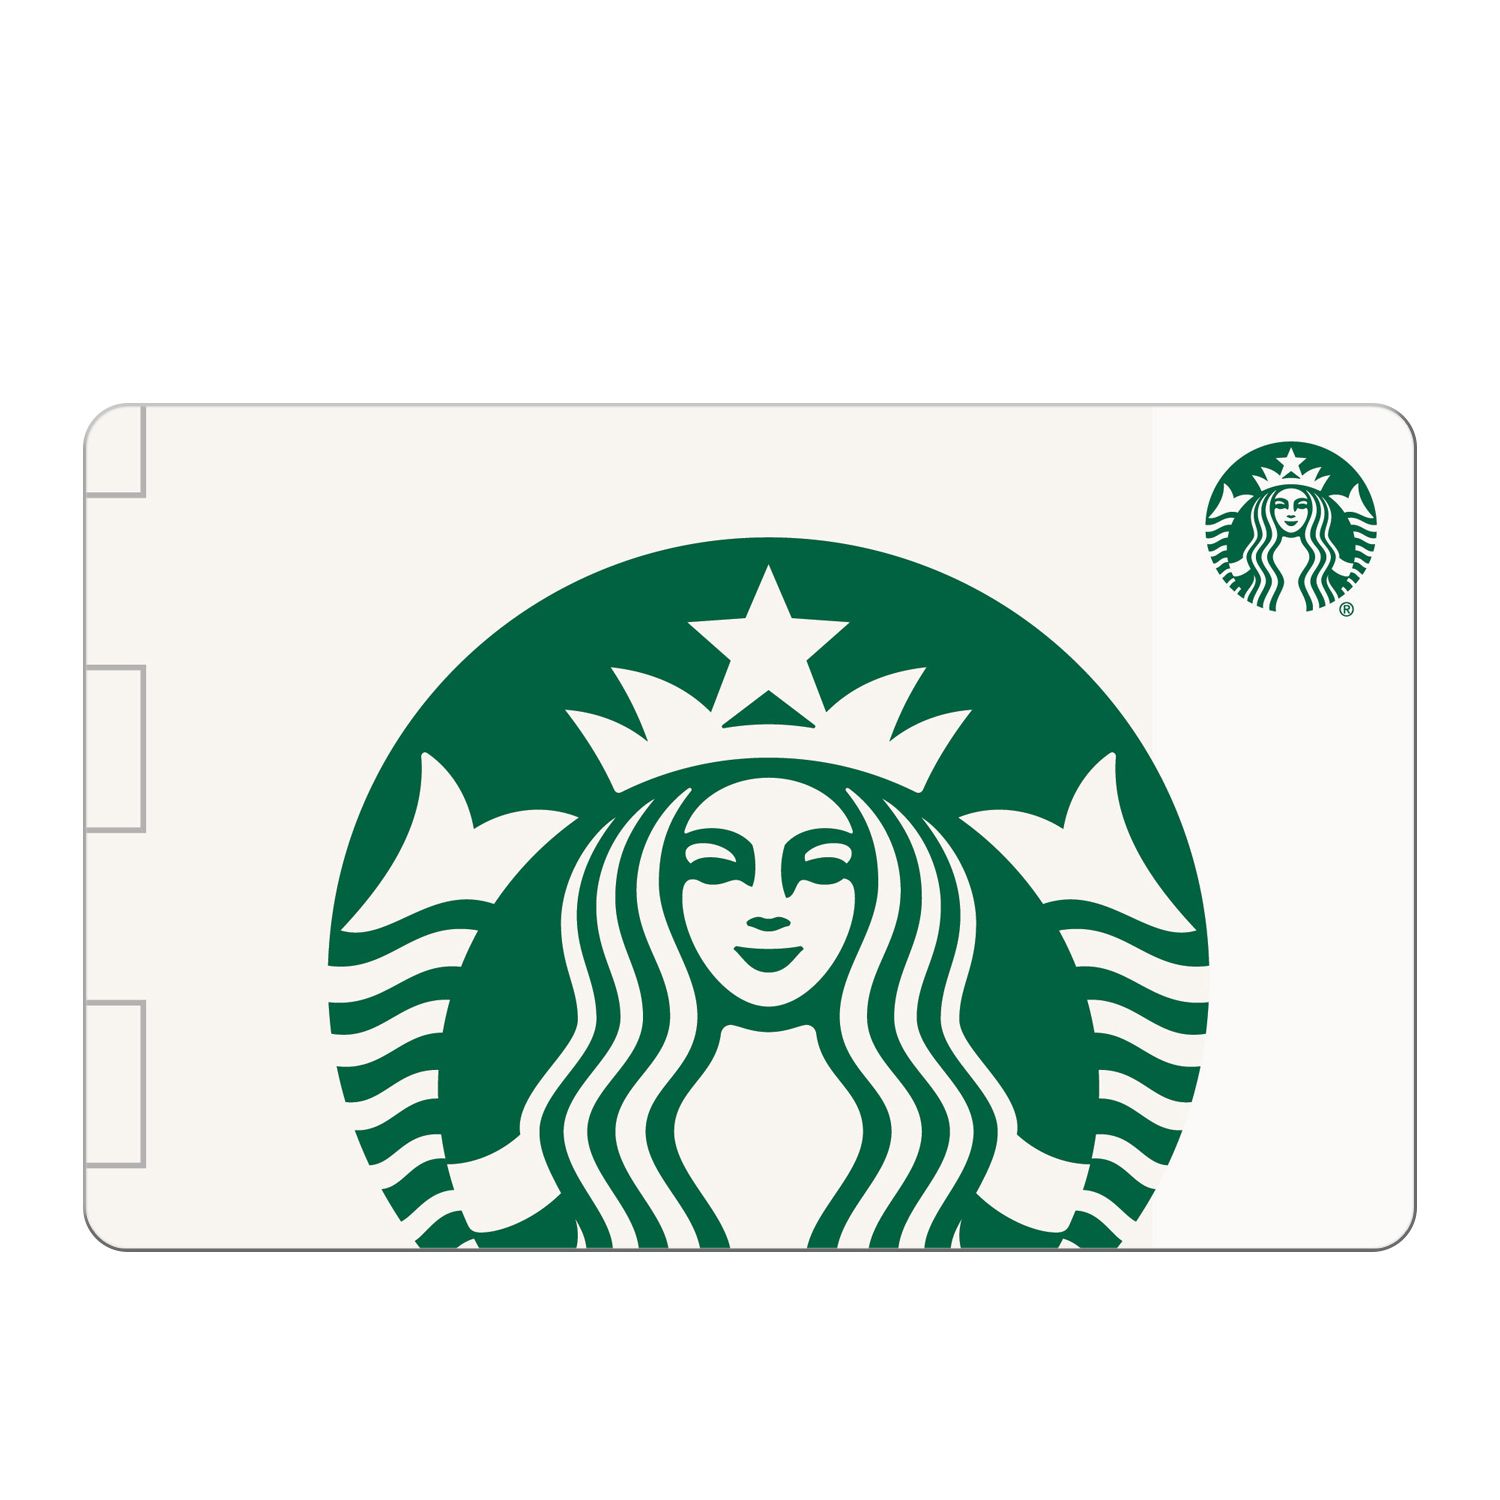 Unused Free Starbucks Gift Card Code